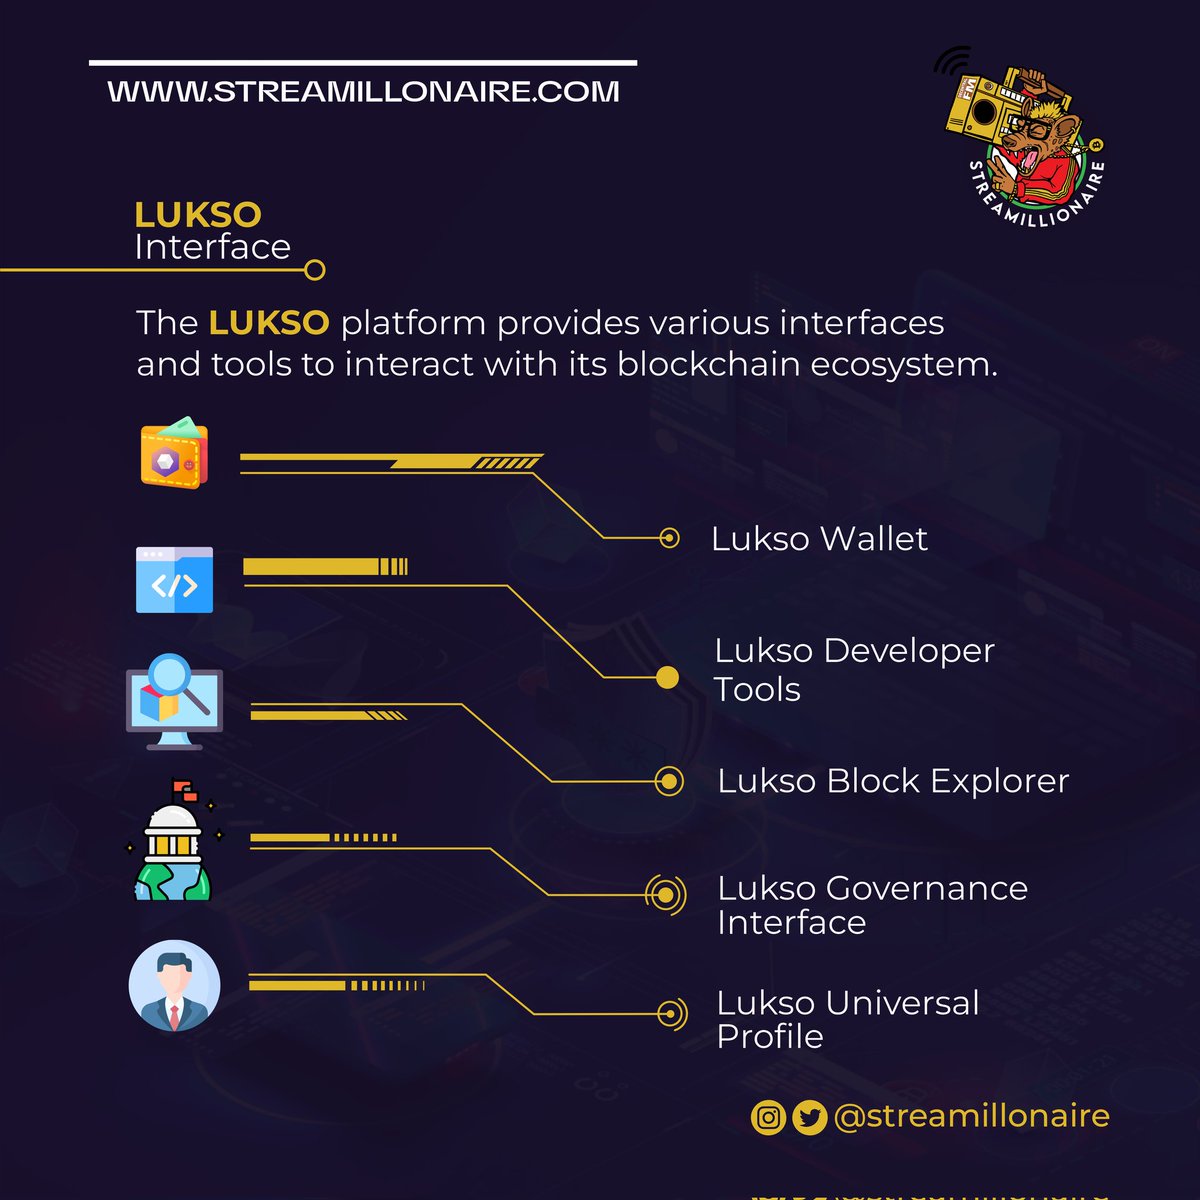 Here are some of the key interfaces associated with LUKSO.

#streamillonaire #lukso #Lagoslabs #digitalinterface #digitalmarket #blockchaintechnology #blockchainrevolution #blockchain_platform #ethereumproject #ethereumnft